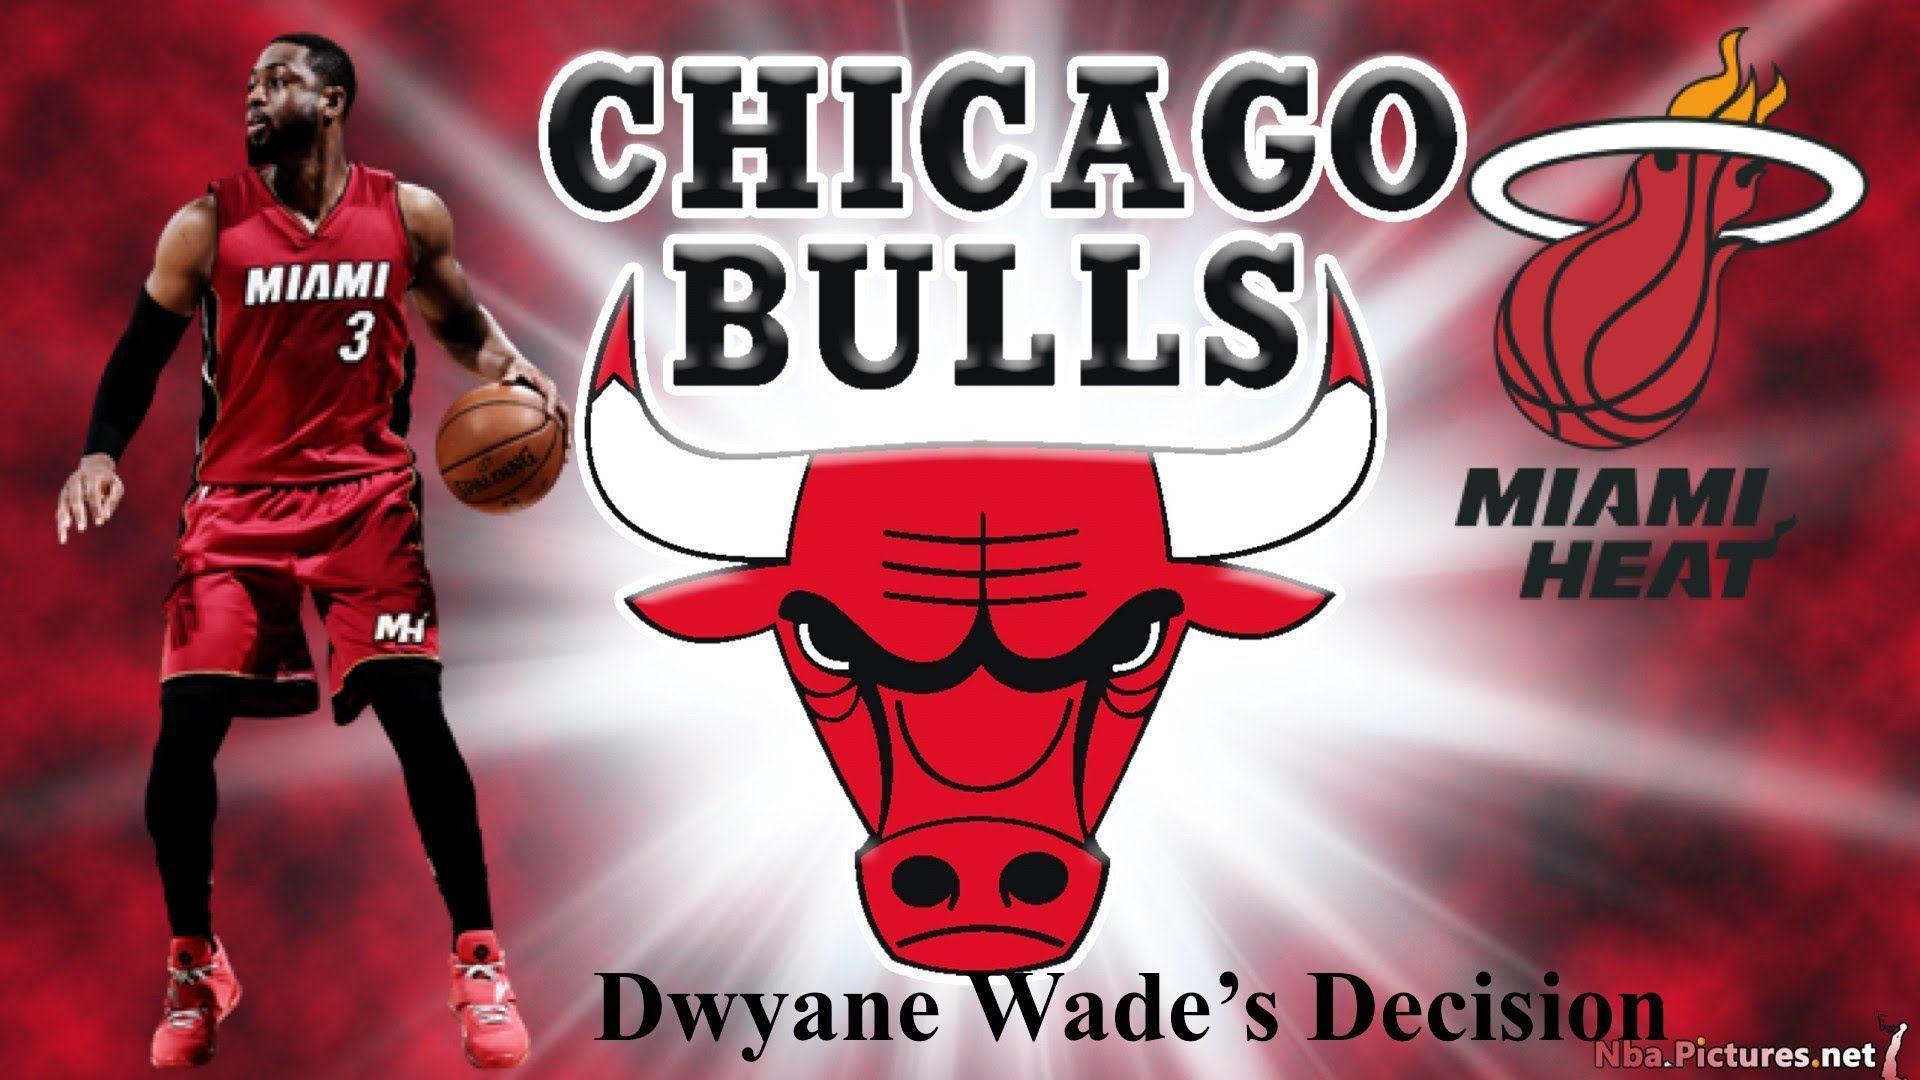 NBA2K17. Dwyane Wade Joins the Chicago Bulls!?!?. Miami Heat Loses